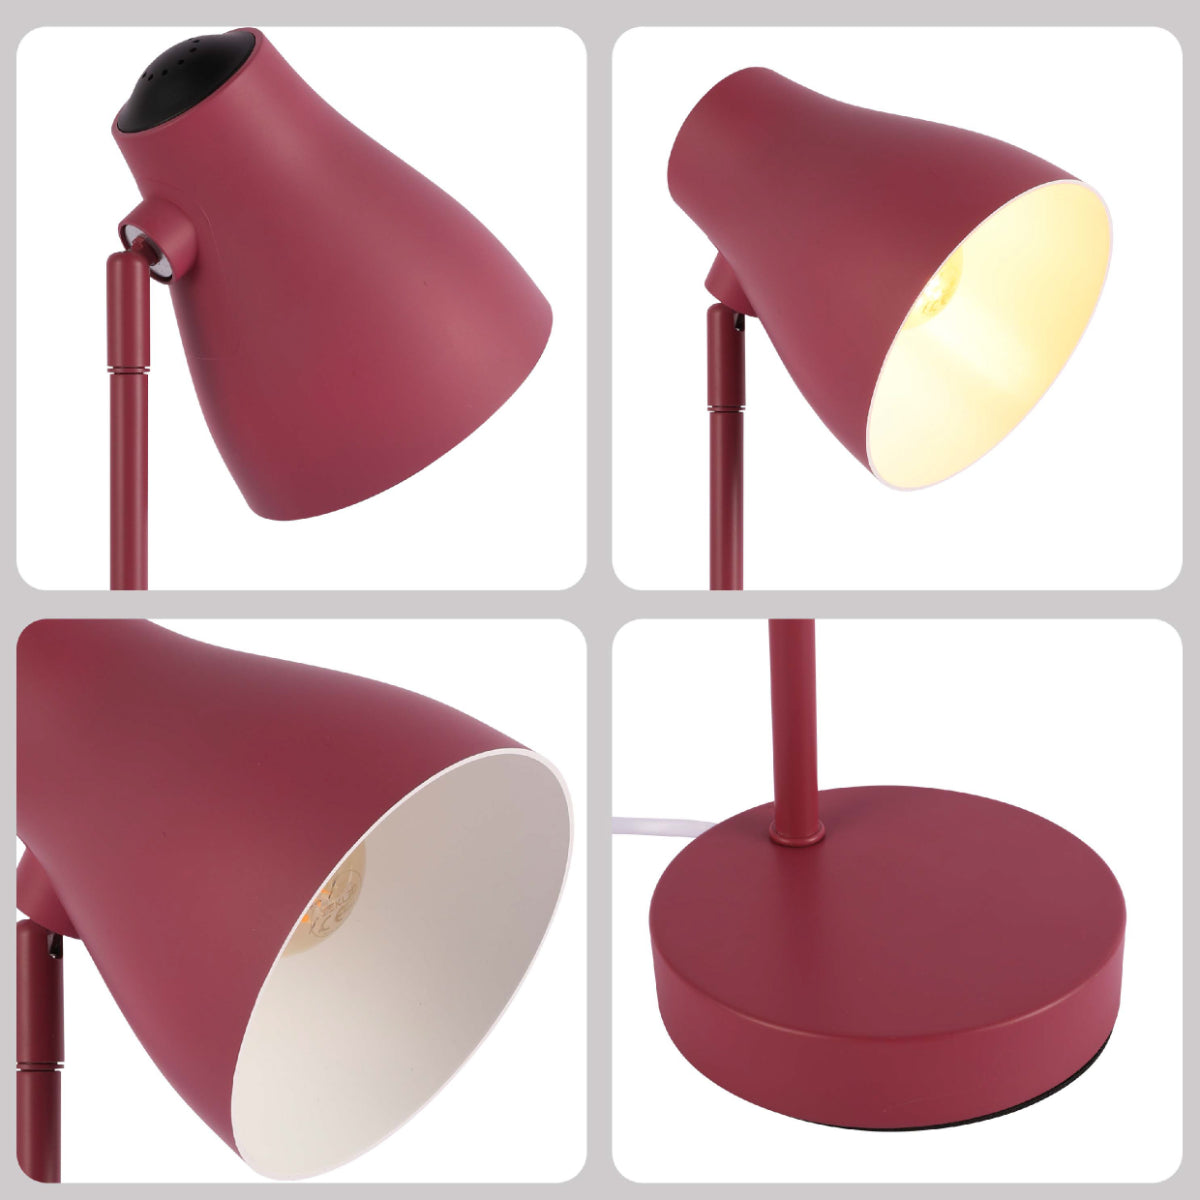 Lighting properties of Elegant Rotatable Desk Lamp in Assorted Colors 130-03648